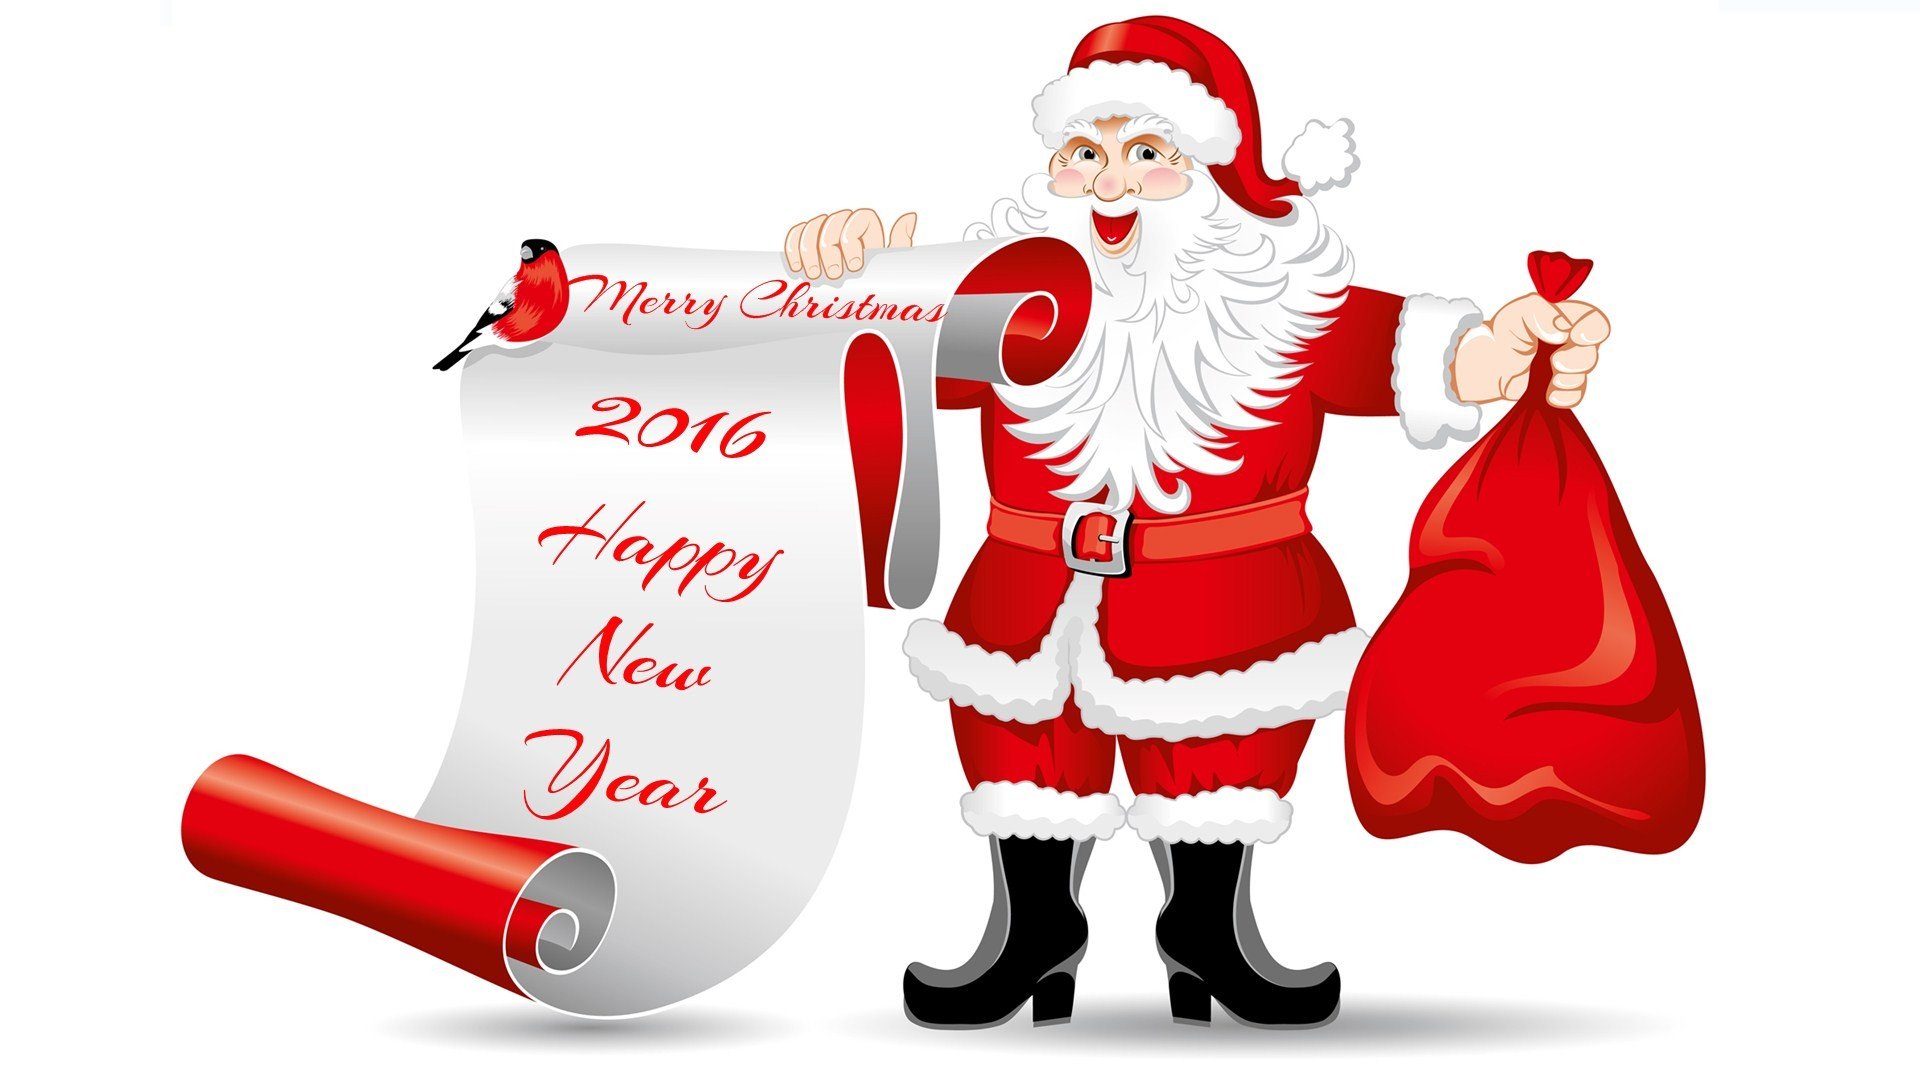 2016, New Year, Holiday, Seasonal, Christmas Wallpaper